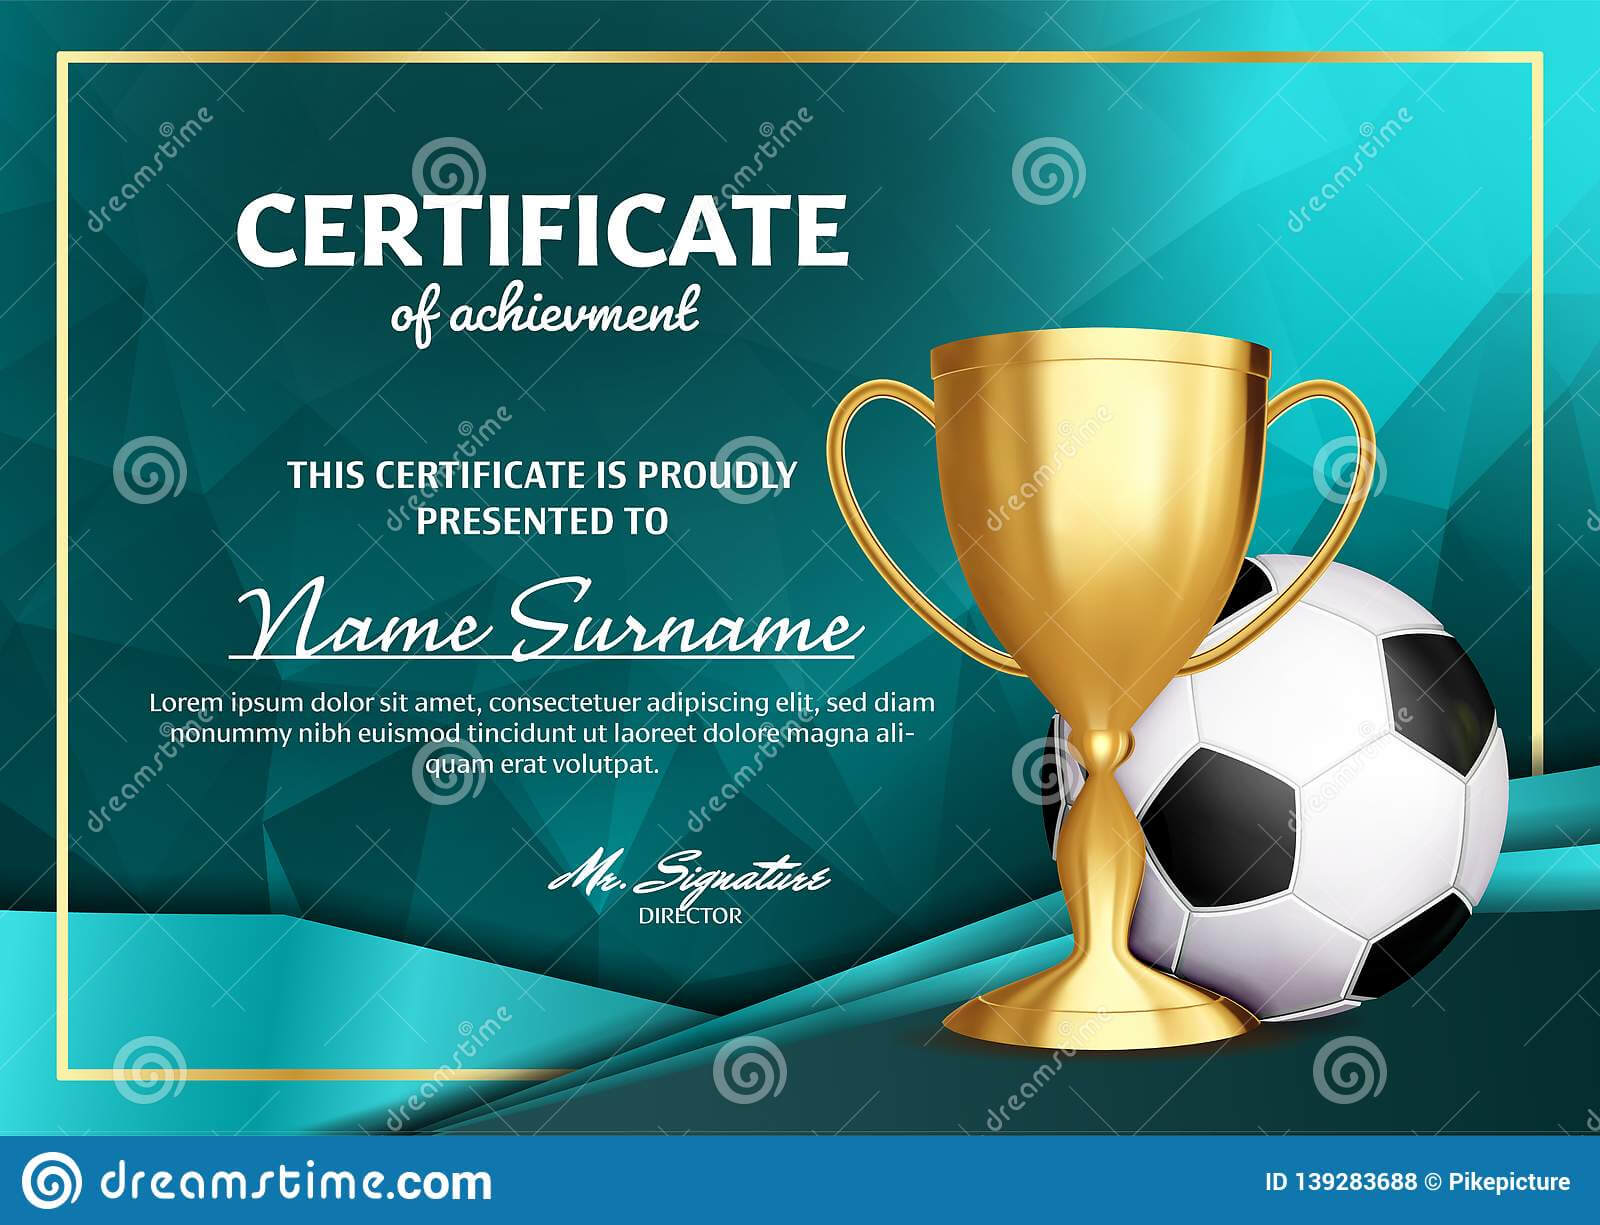 Printable Soccer Certificates Printable World Holiday